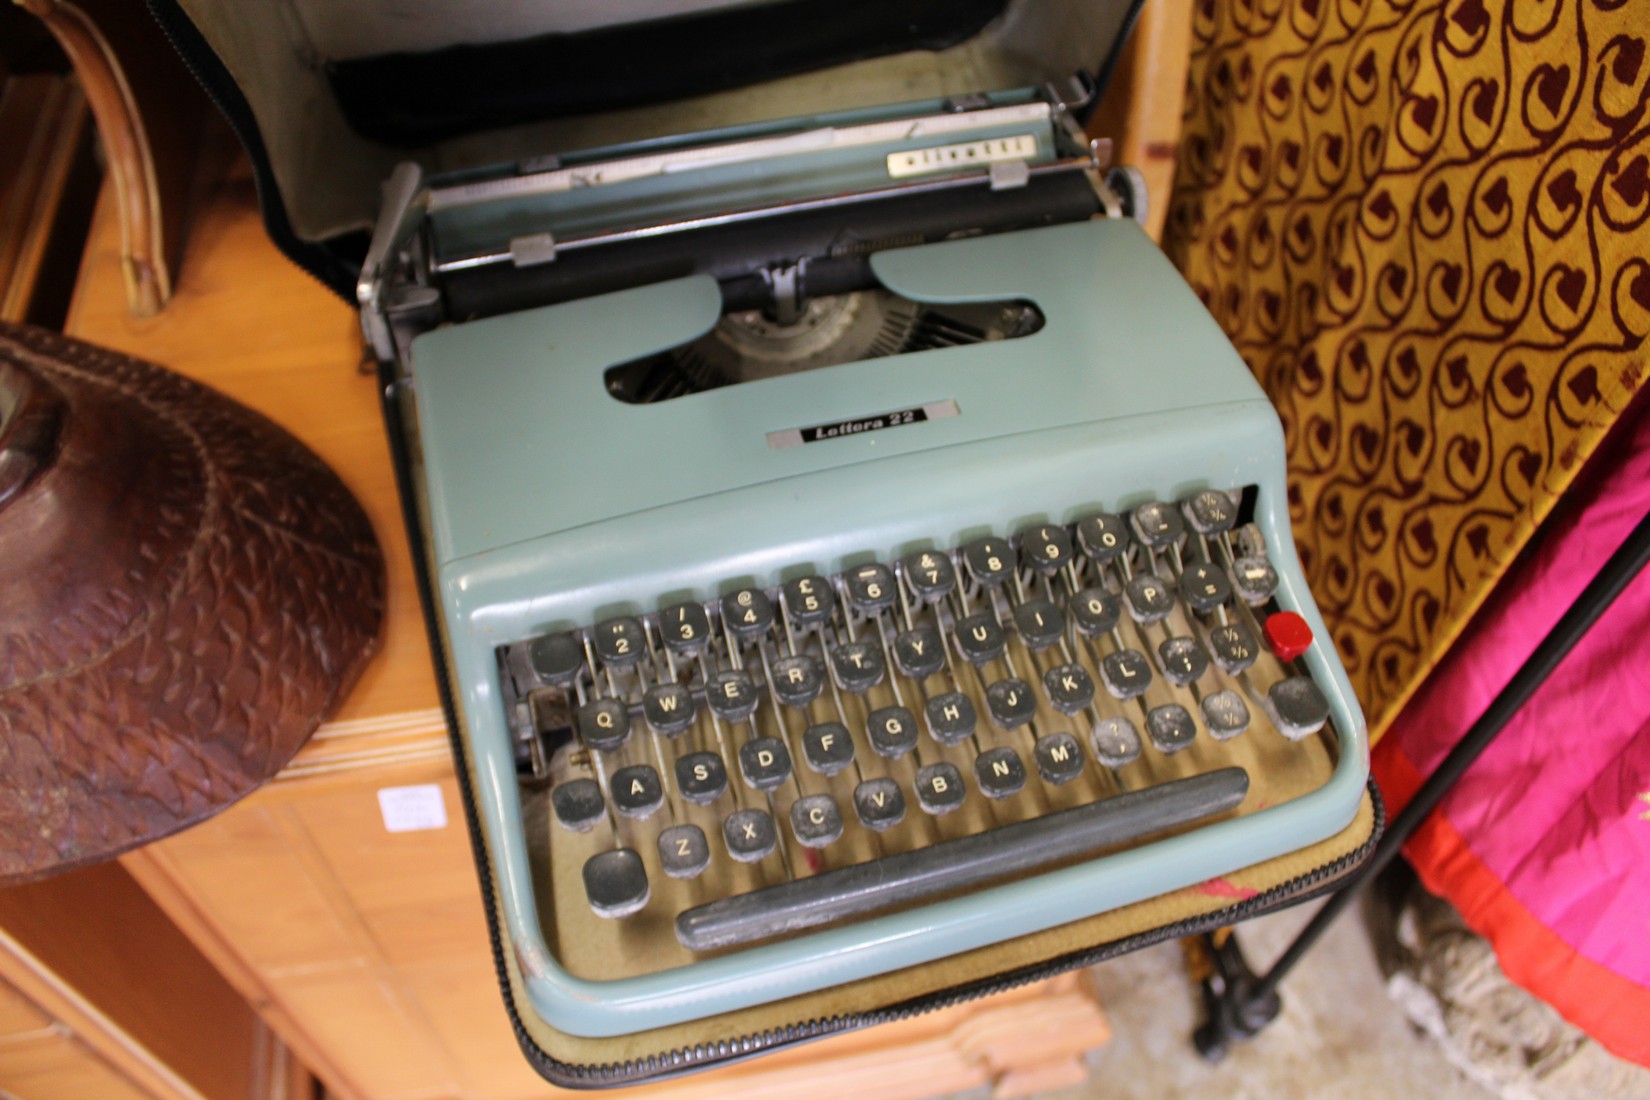 An Olivetti Lettera 22 portable typewriter.